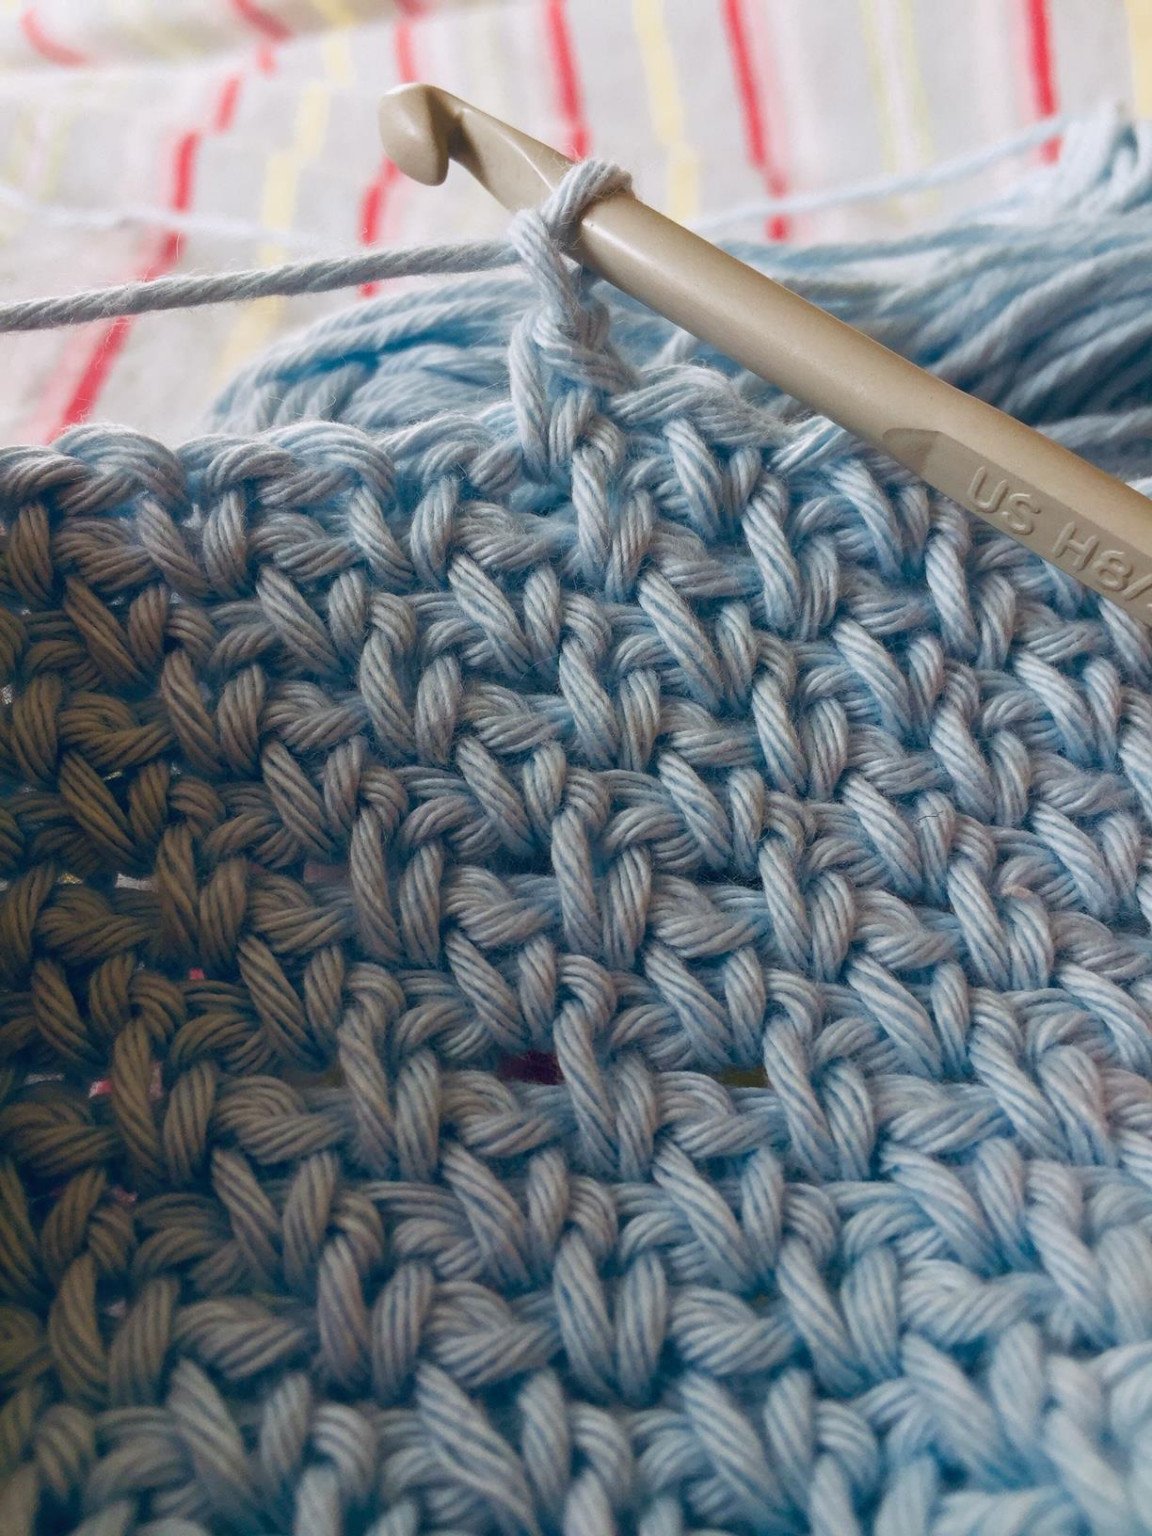 Beginners Crochet - Stitch & Knit